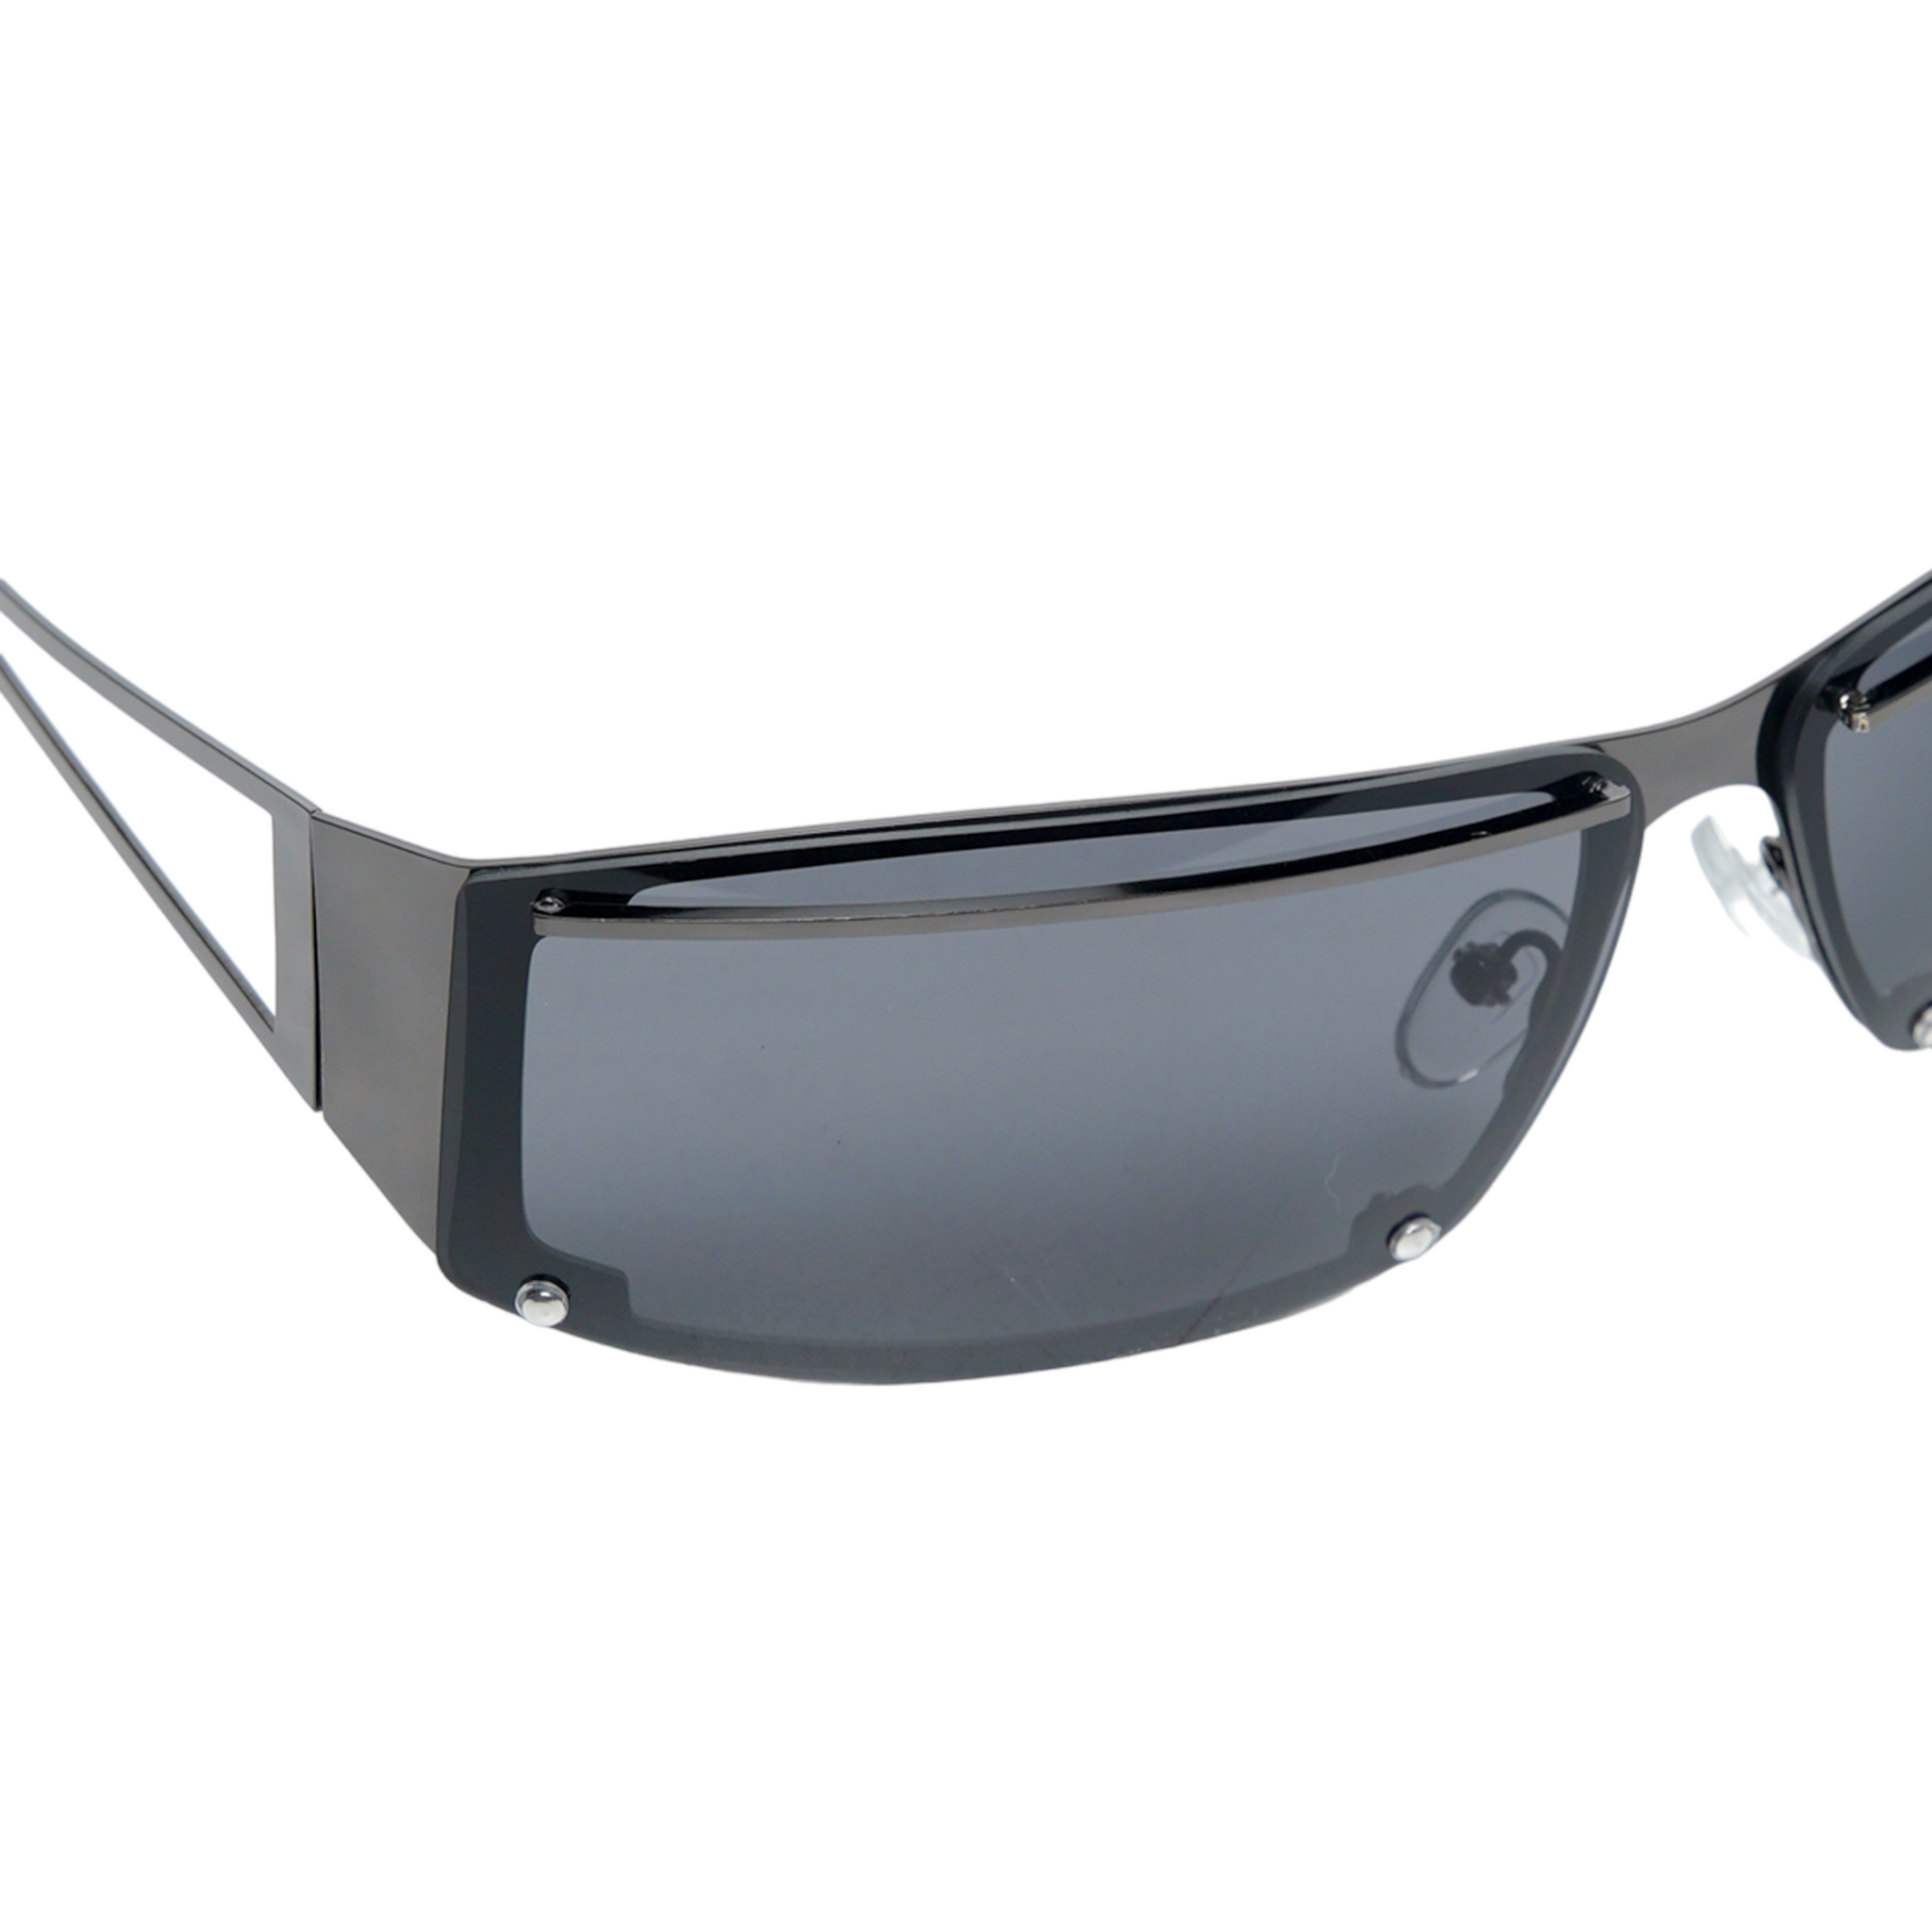 Chokore Hollow Metallic Wrap-around Sunglasses (Black-Gray)